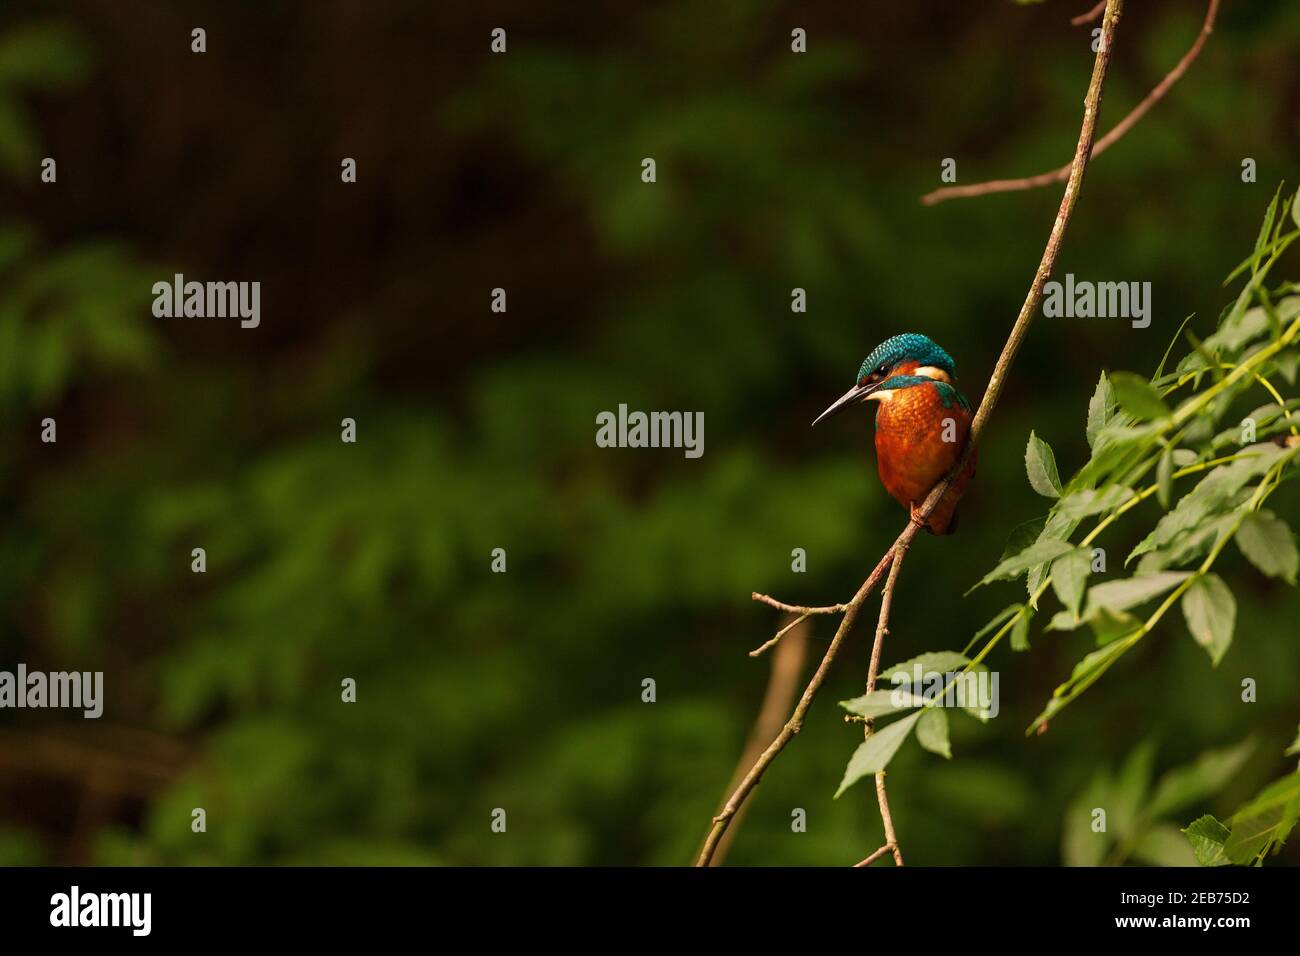 Kingfisher in their natural habitat. Stock Photo